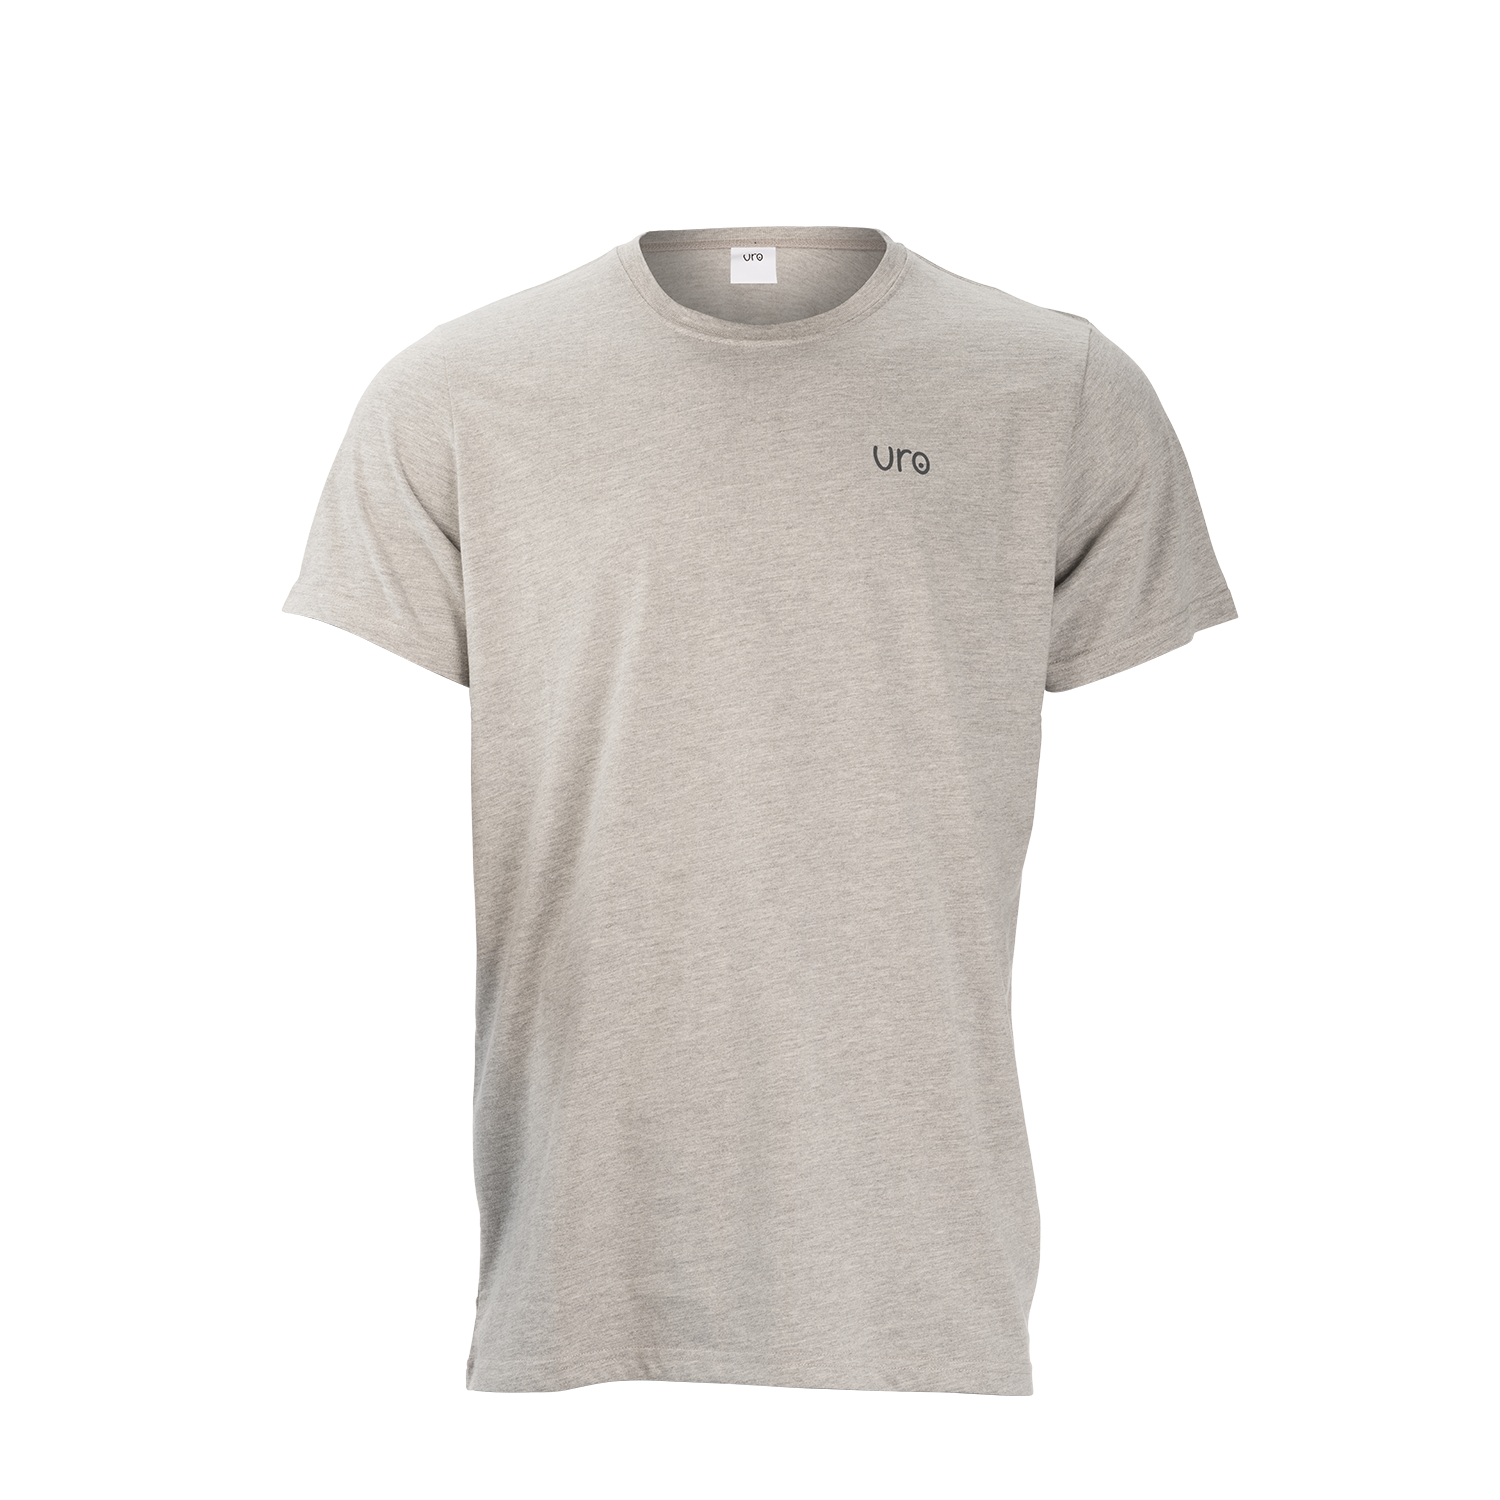 Iggy T-Shirt / Light Grey